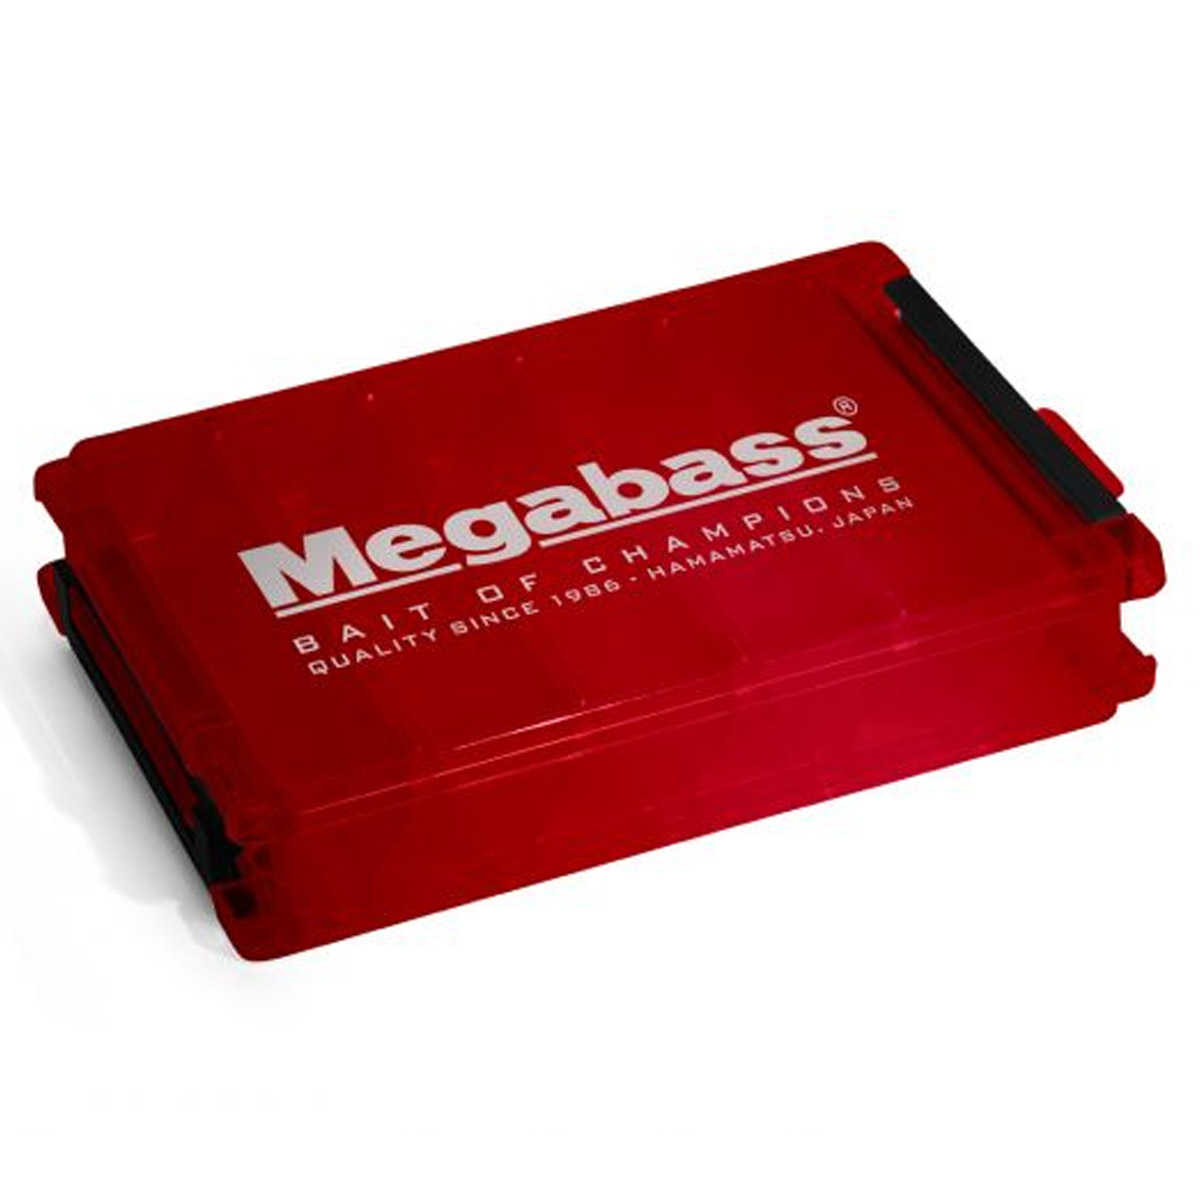 Megabass Lunker Lunch Box Reversible RV140 Red